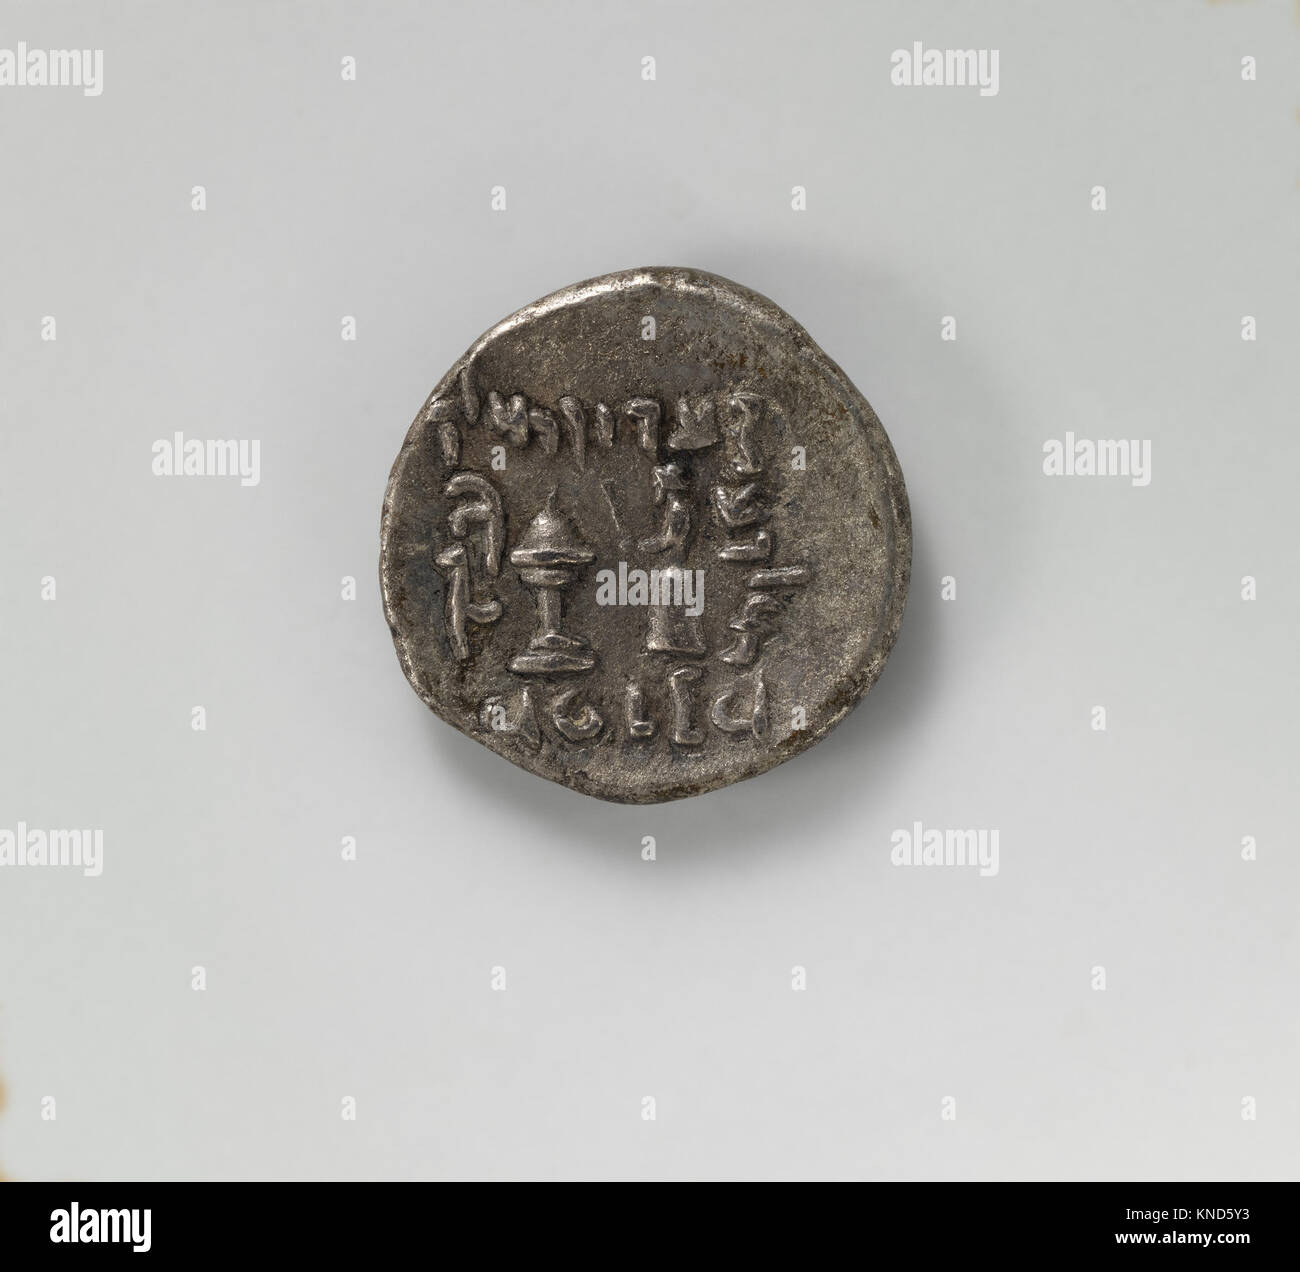 Drachm MET DP-1113-002 322349 Parthian, Drachm, ca. 1st century B.C., Silver, 0.09 in. (0.23 cm). The Metropolitan Museum of Art, New York. Bequest of Joseph H. Durkee, 1898 (99.35.2951) Stock Photo